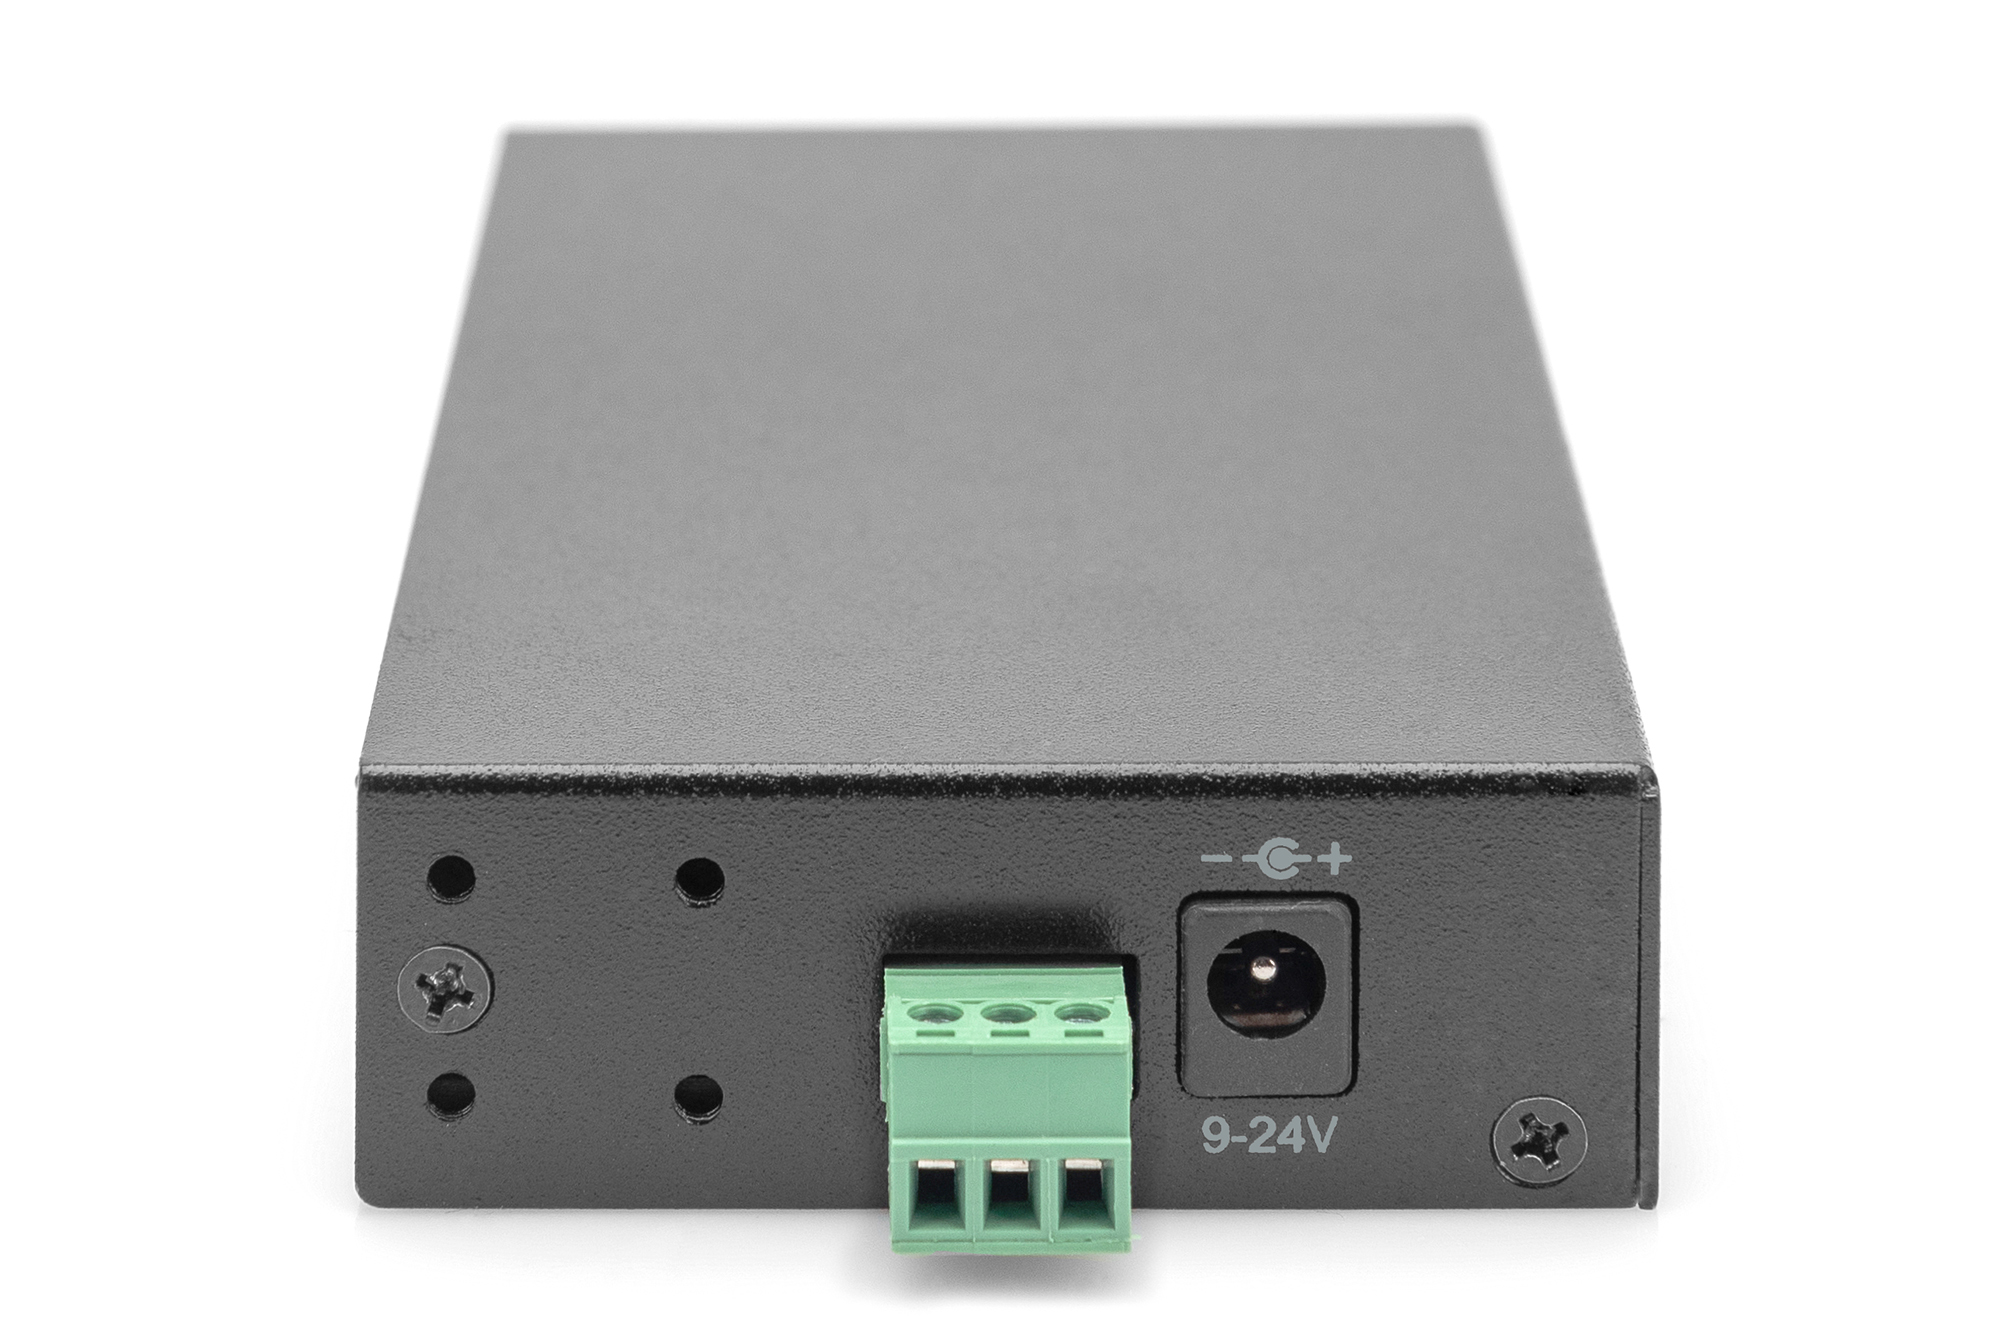 DIGITUS Hub USB 3.0, 7 porte, Industrial Line